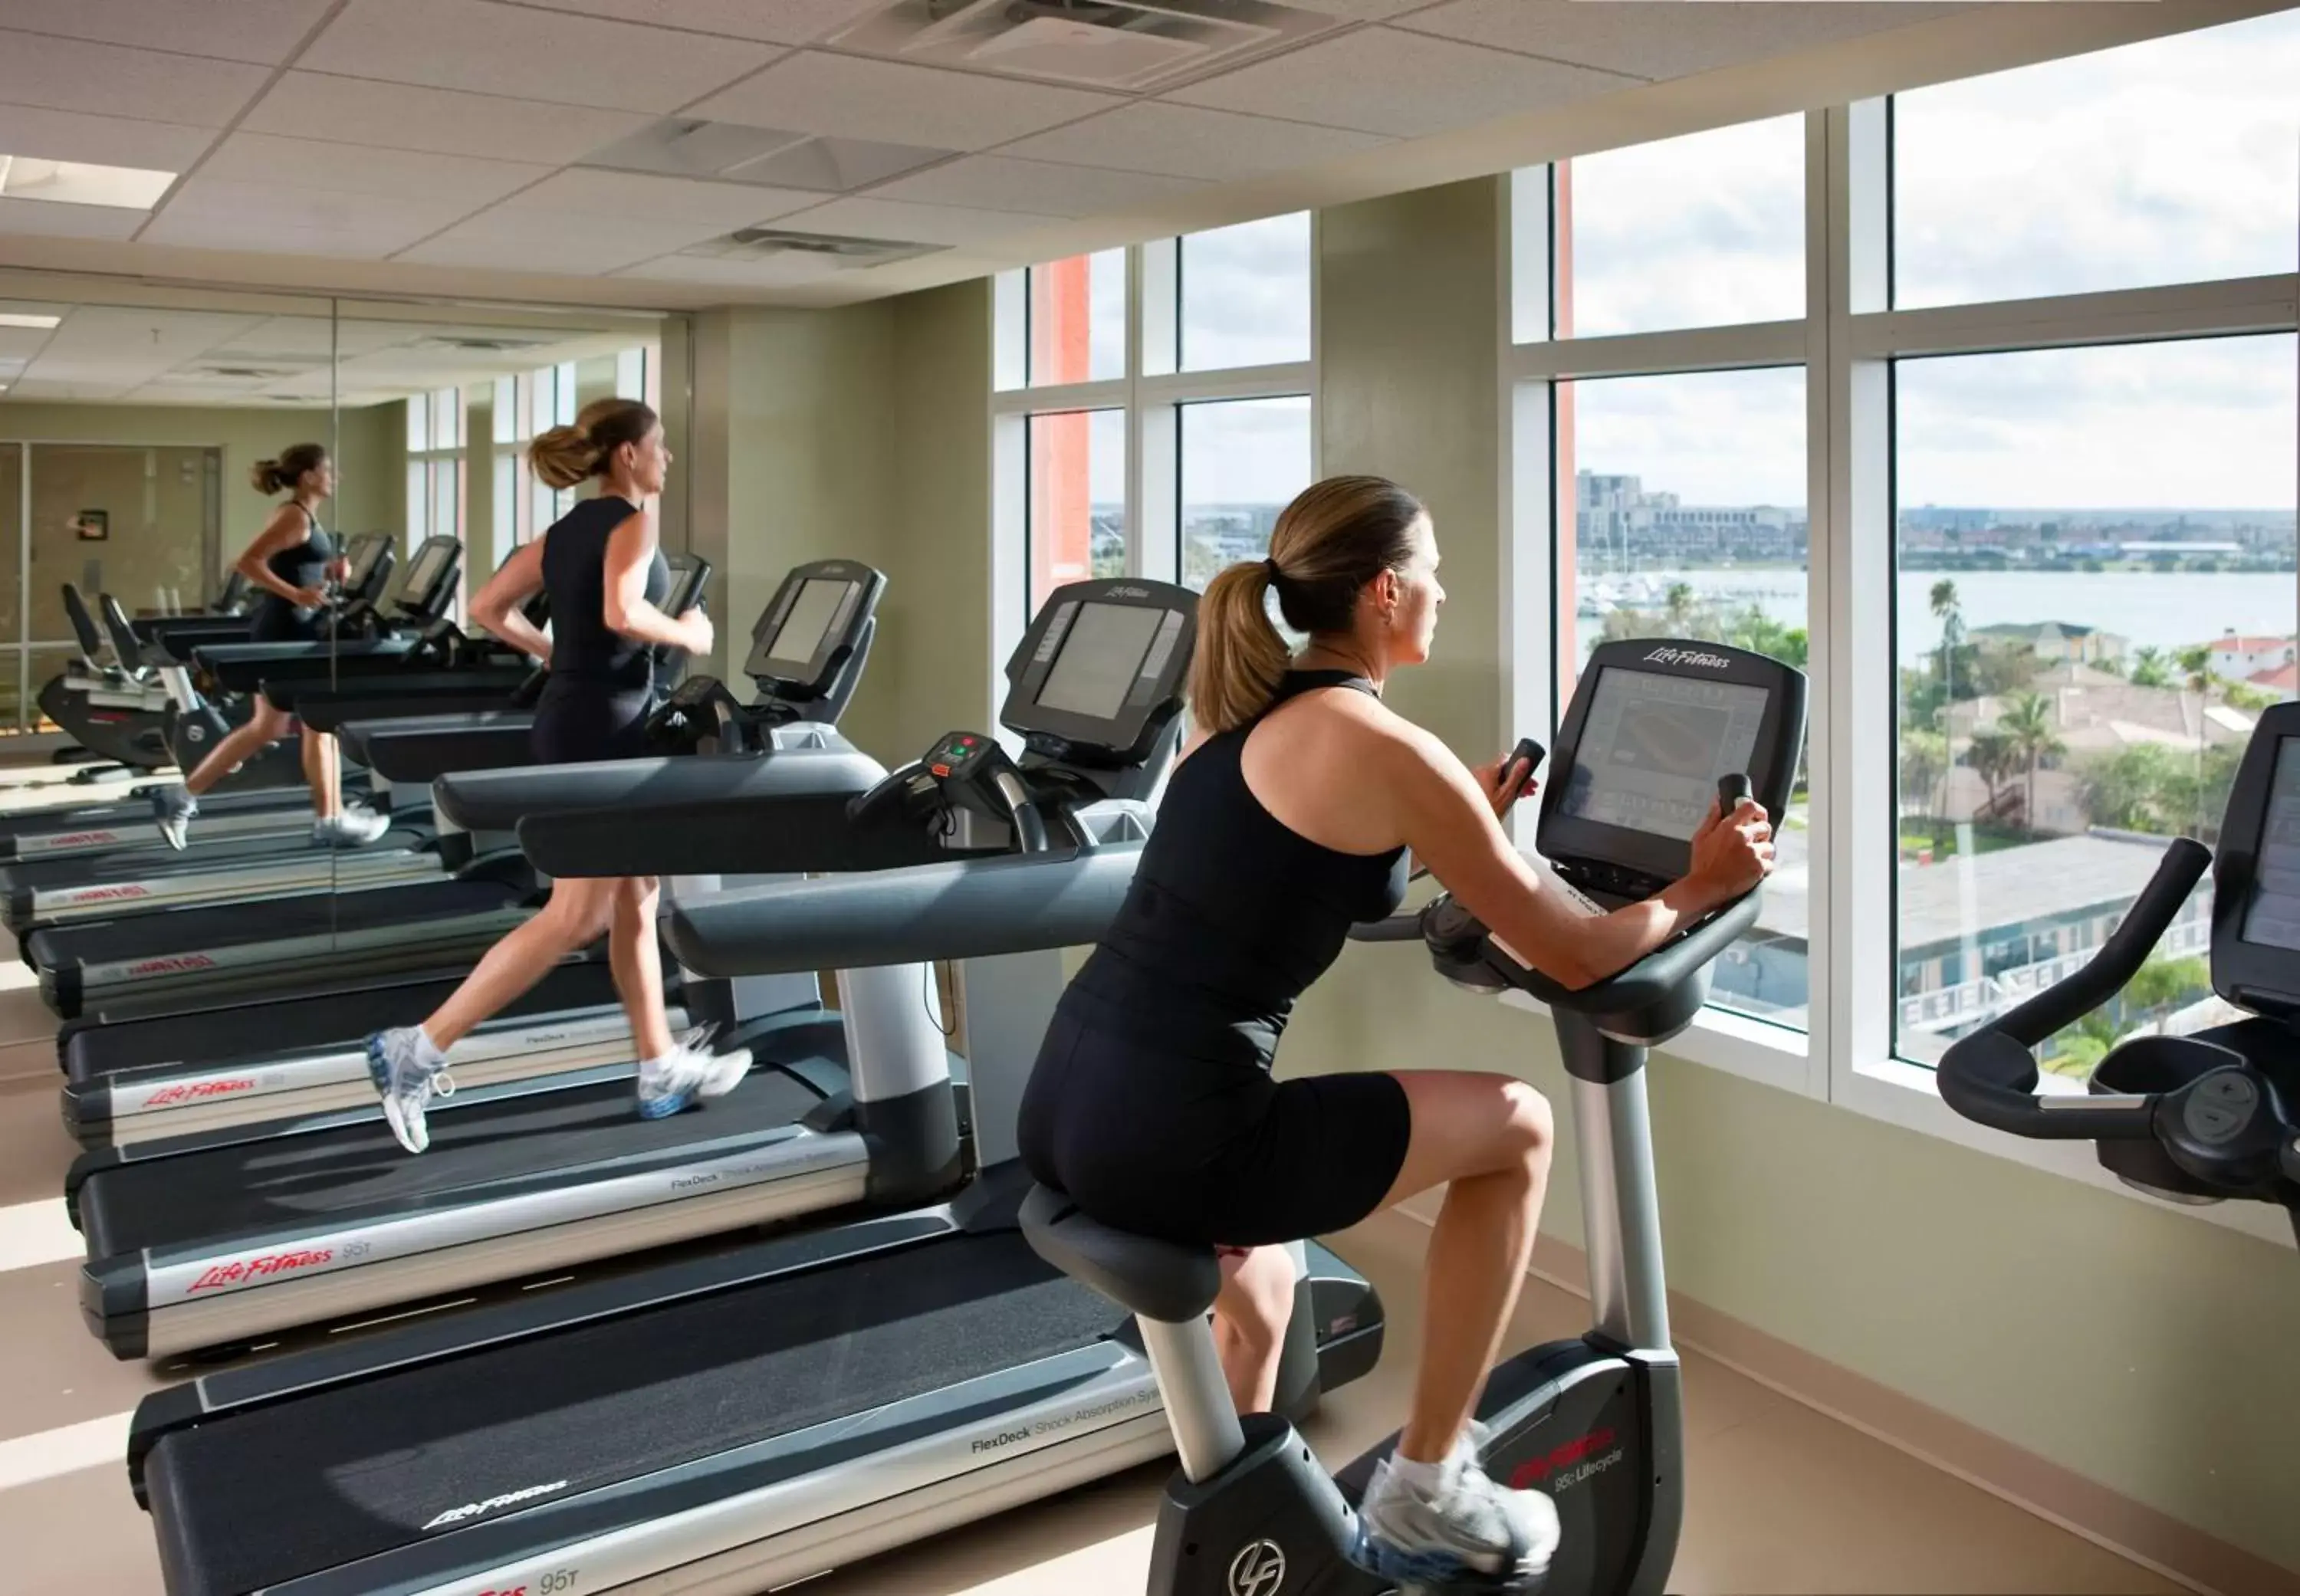 Fitness centre/facilities, Fitness Center/Facilities in Hyatt Regency Clearwater Beach Resort & Spa